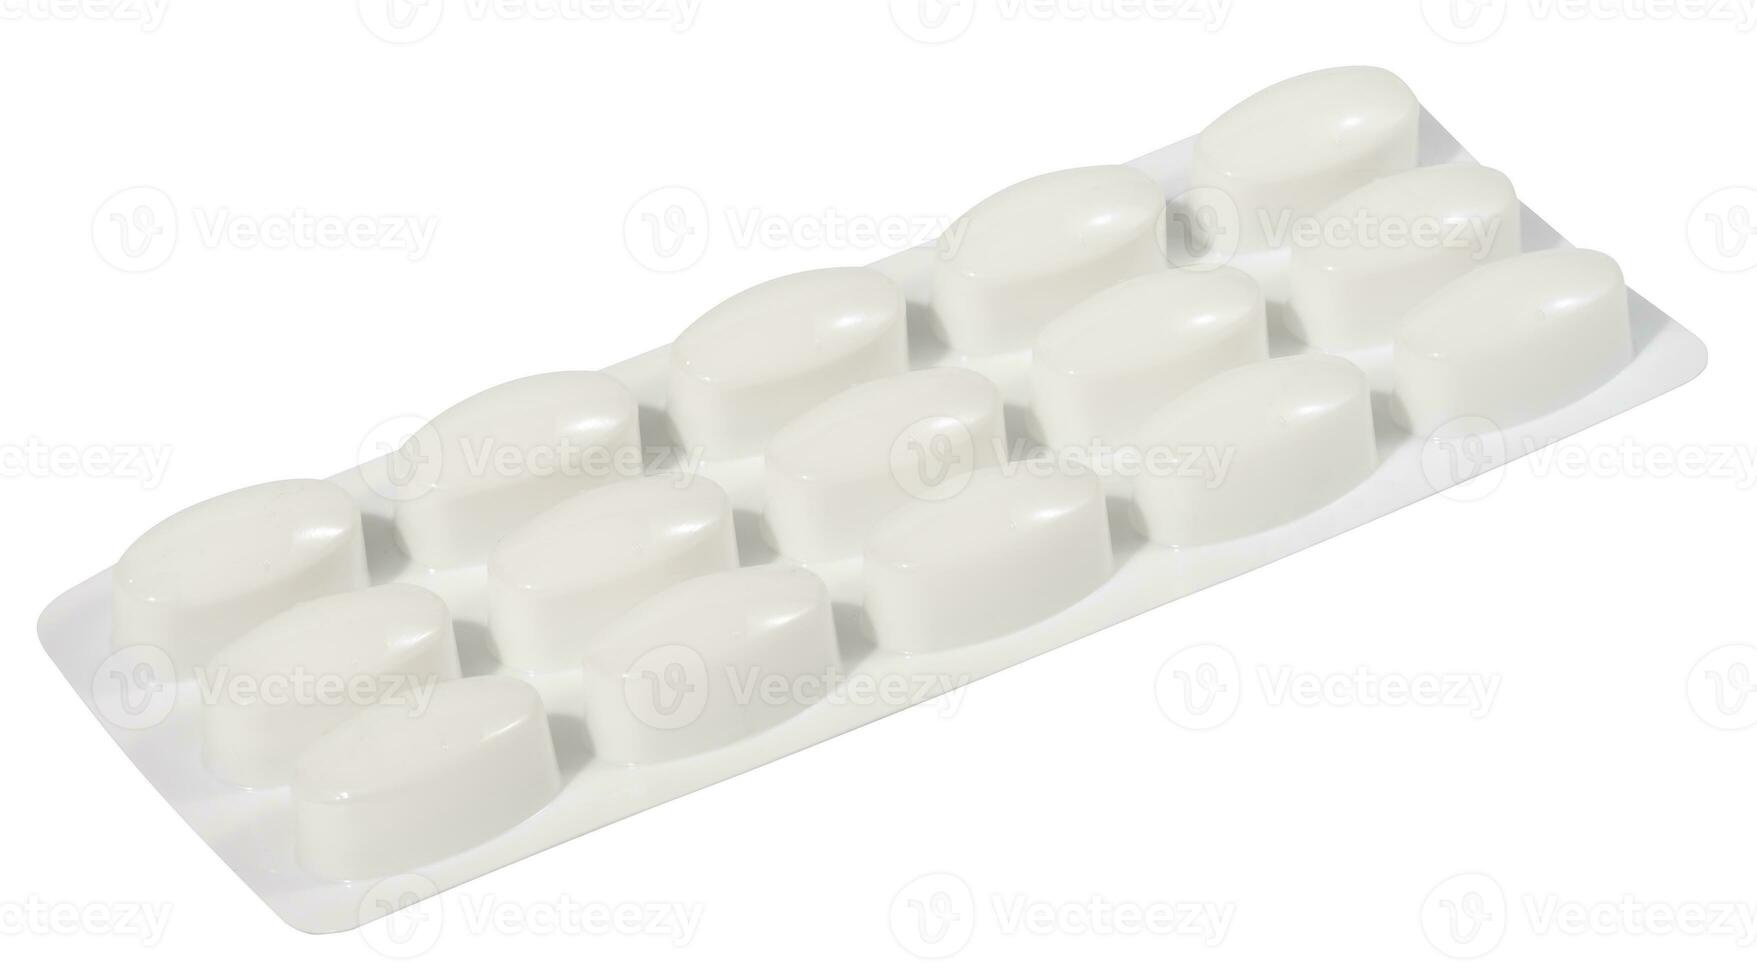 ovaal tablets in wit plastic verpakking foto